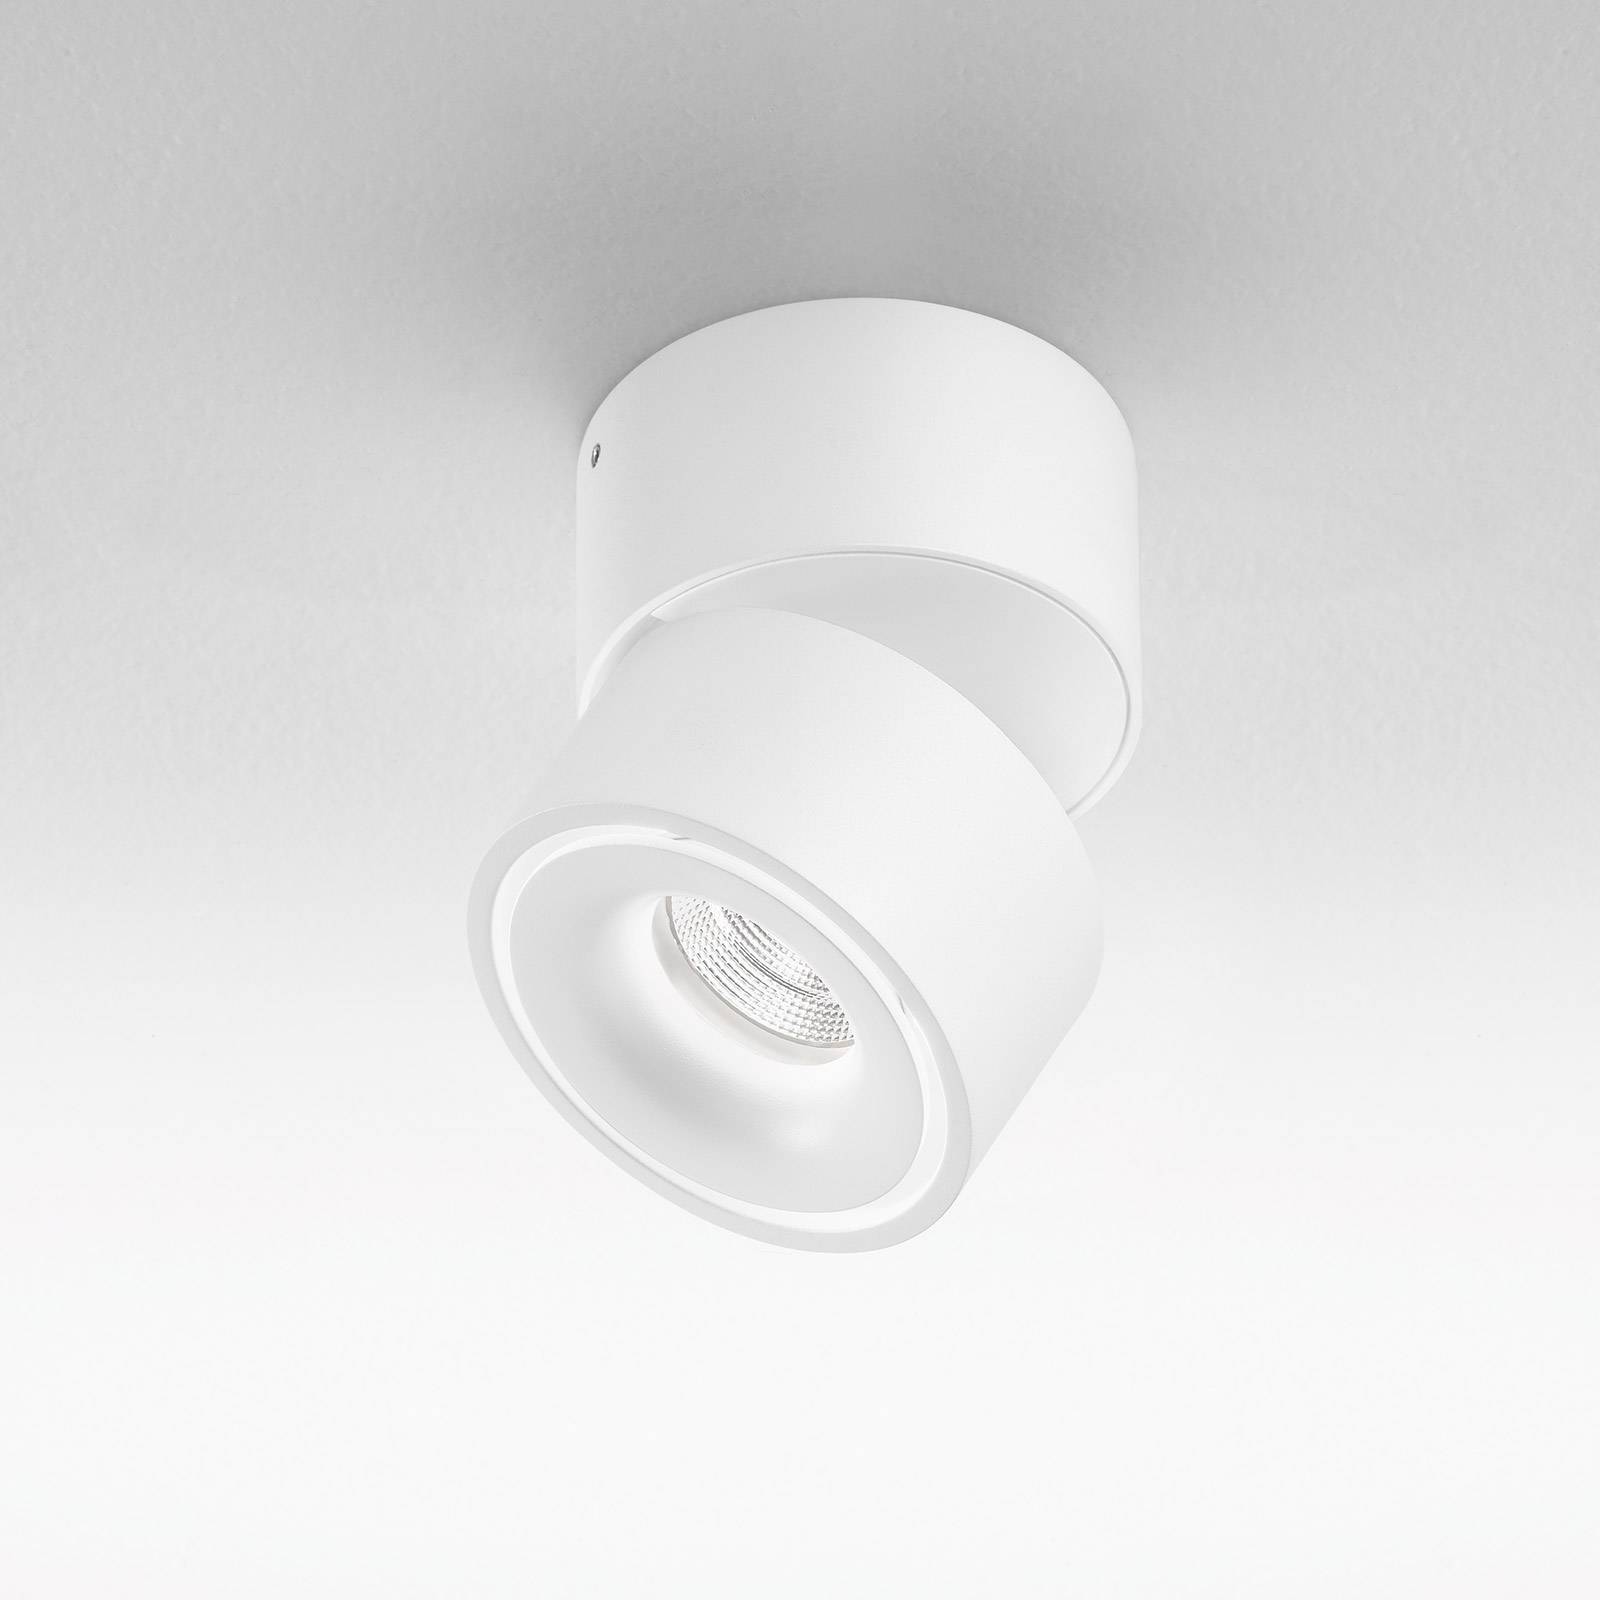 Egger Licht Egger Clippo LED lištová bodovka dim-to-warm bílá